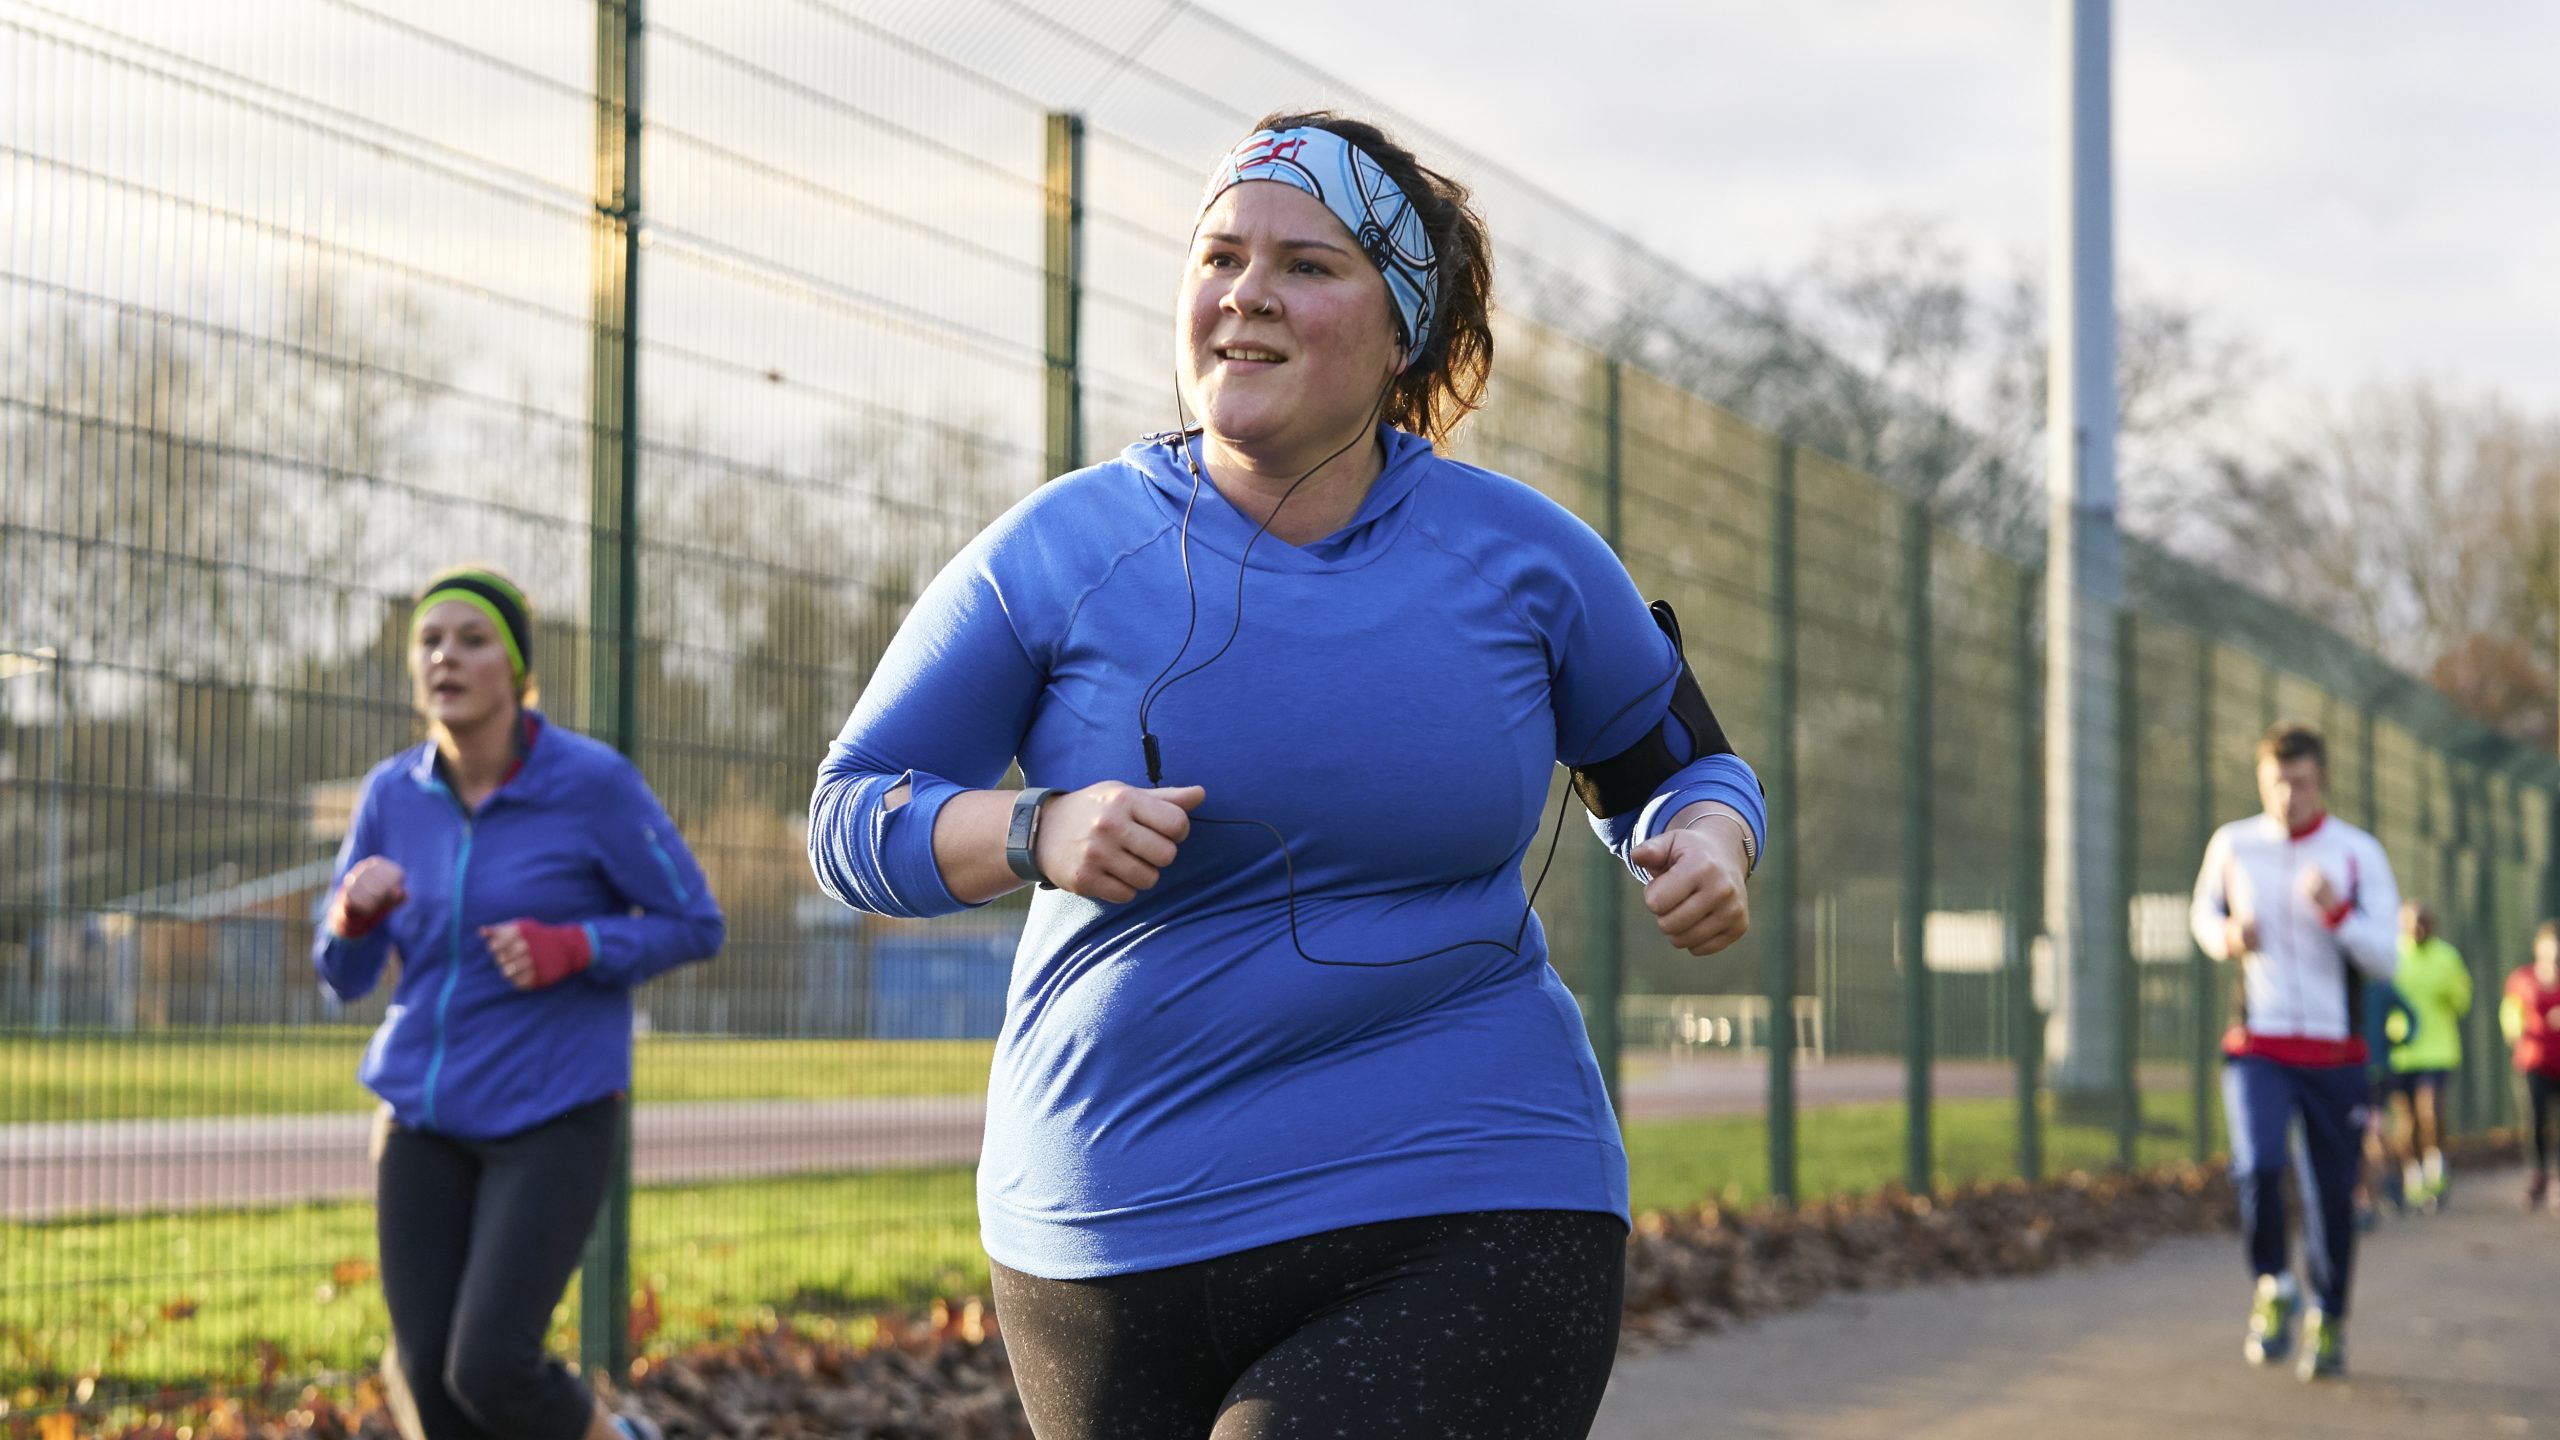 White woman aged 30-40 running